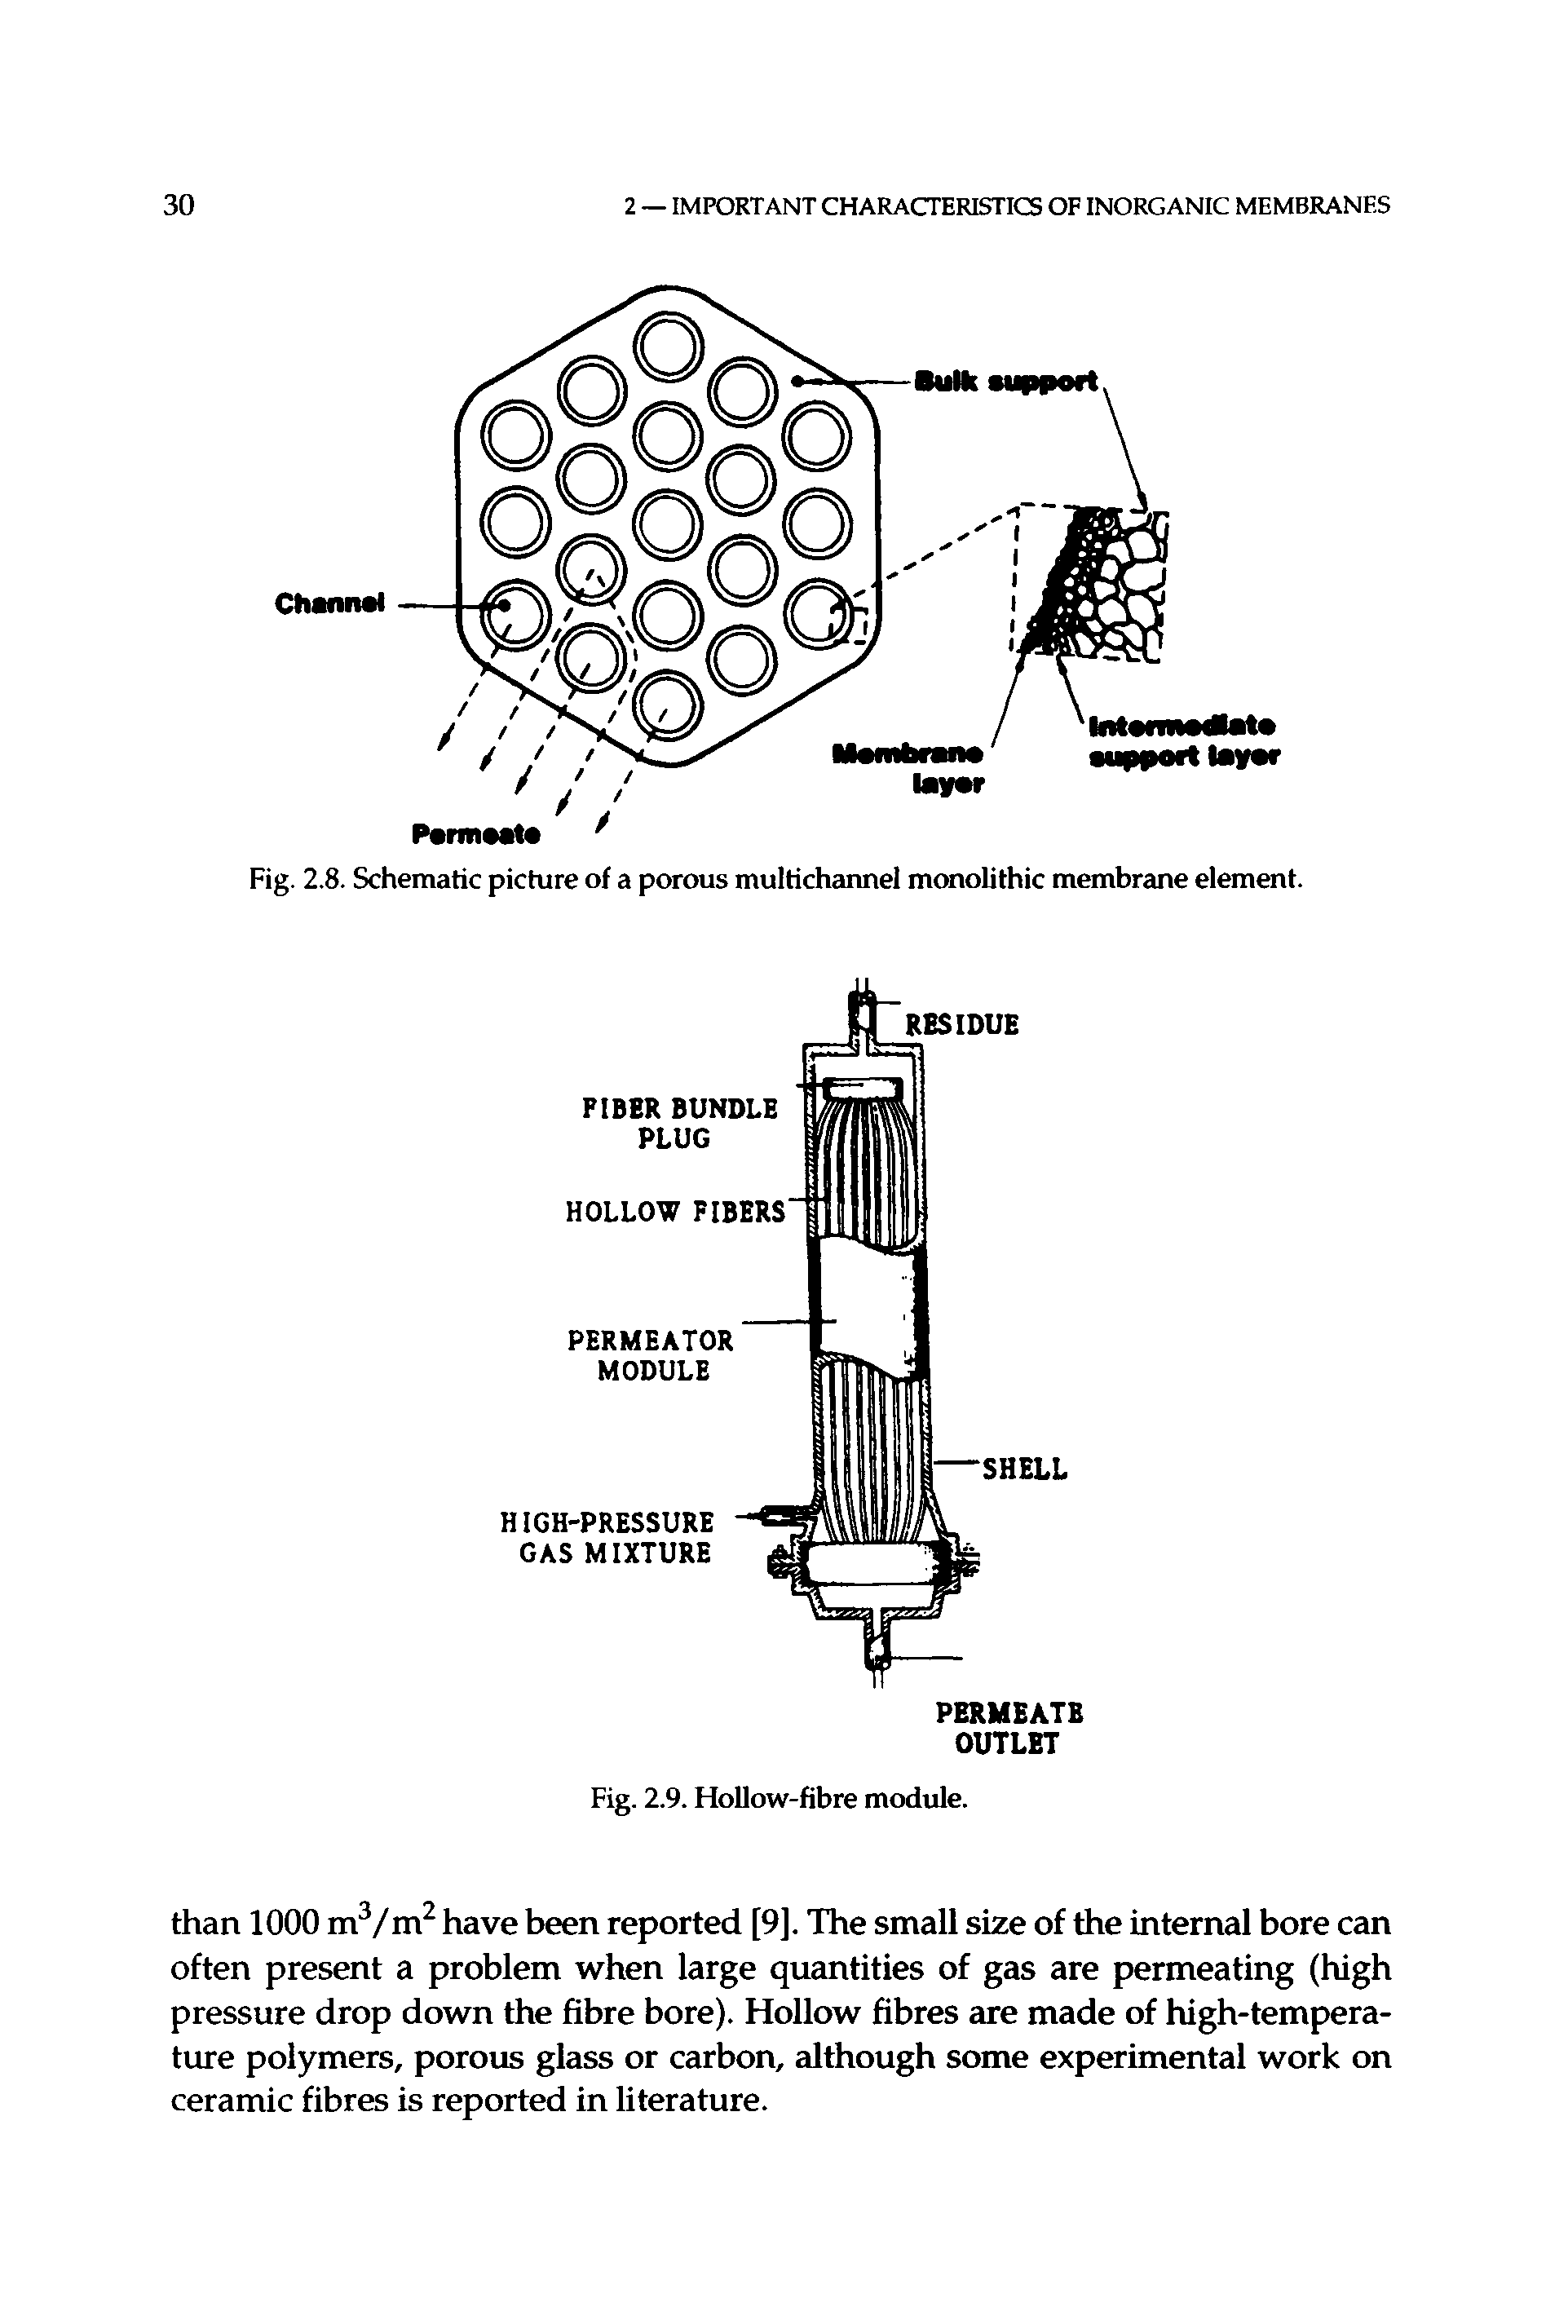 Fig. 2.8. Schematic picture of a porous multichcumel monolithic membrane element.